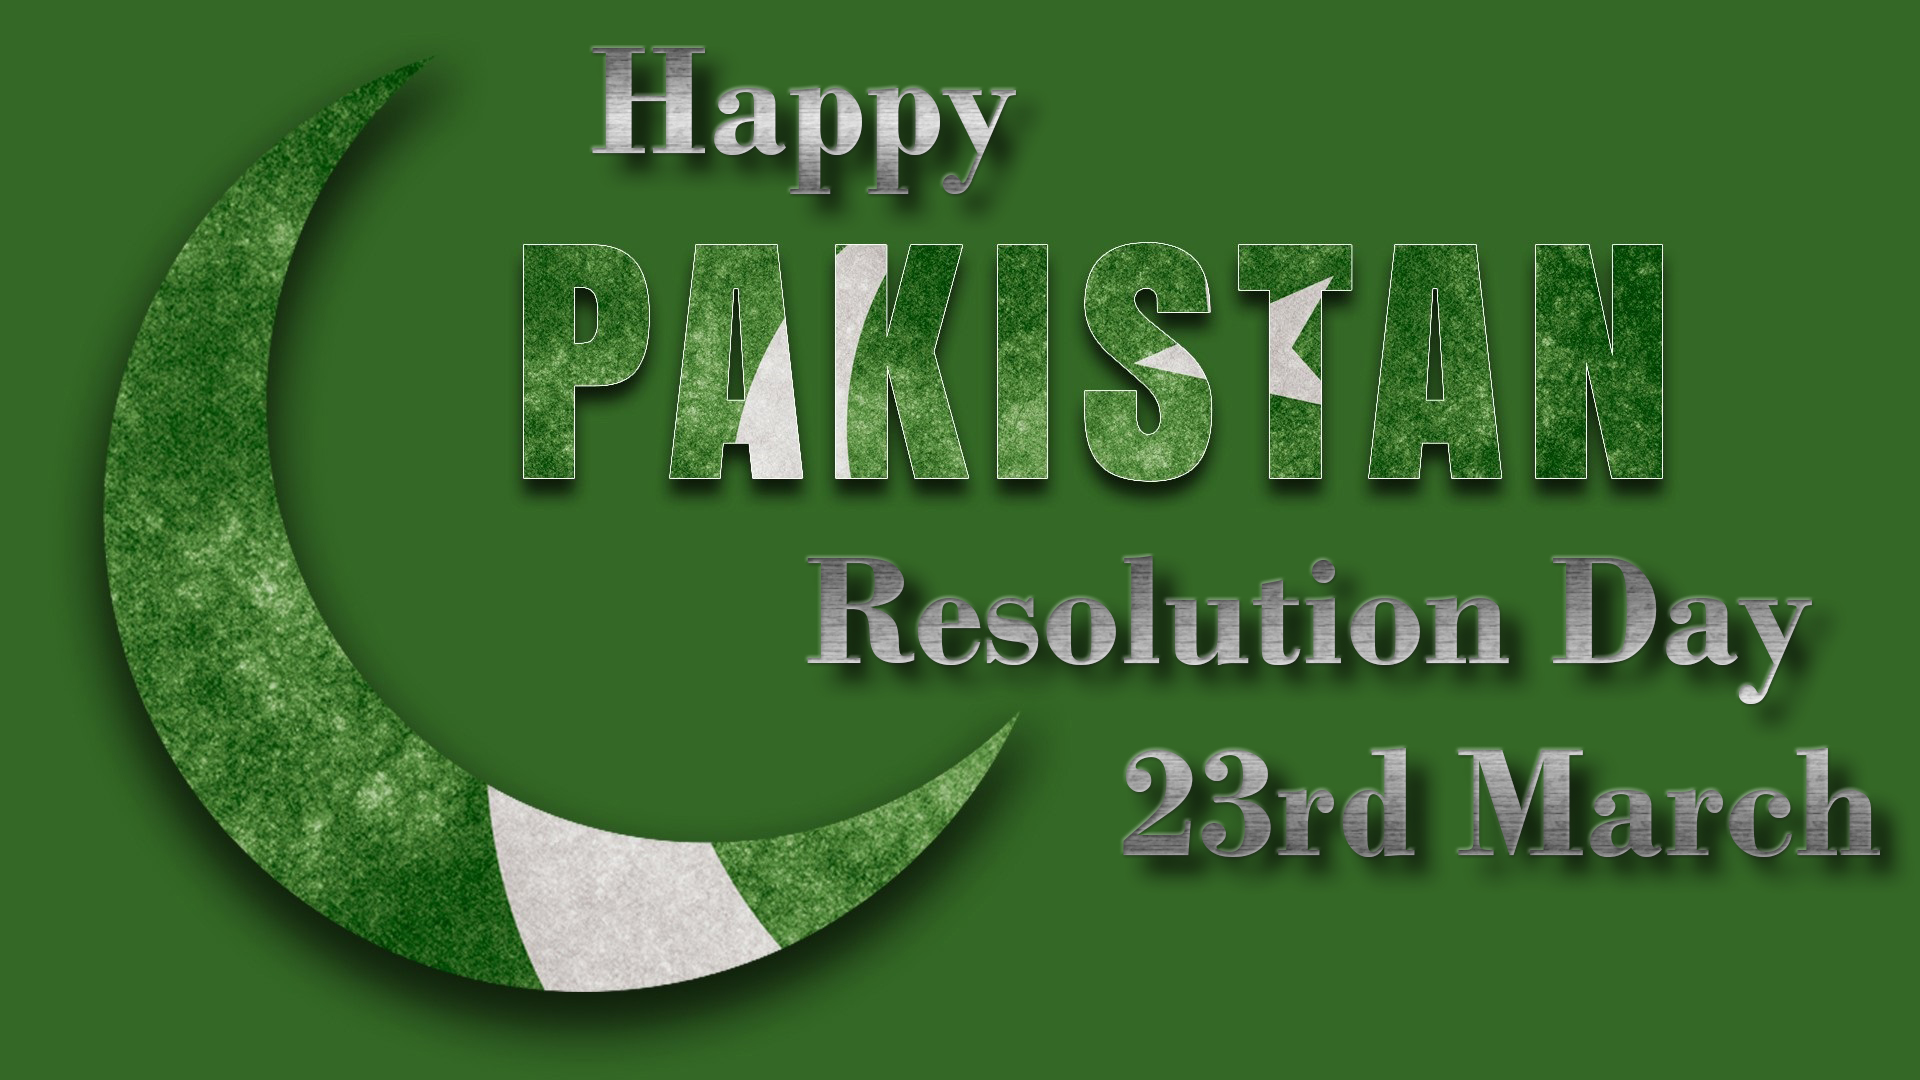 happy pakistan resolution day image